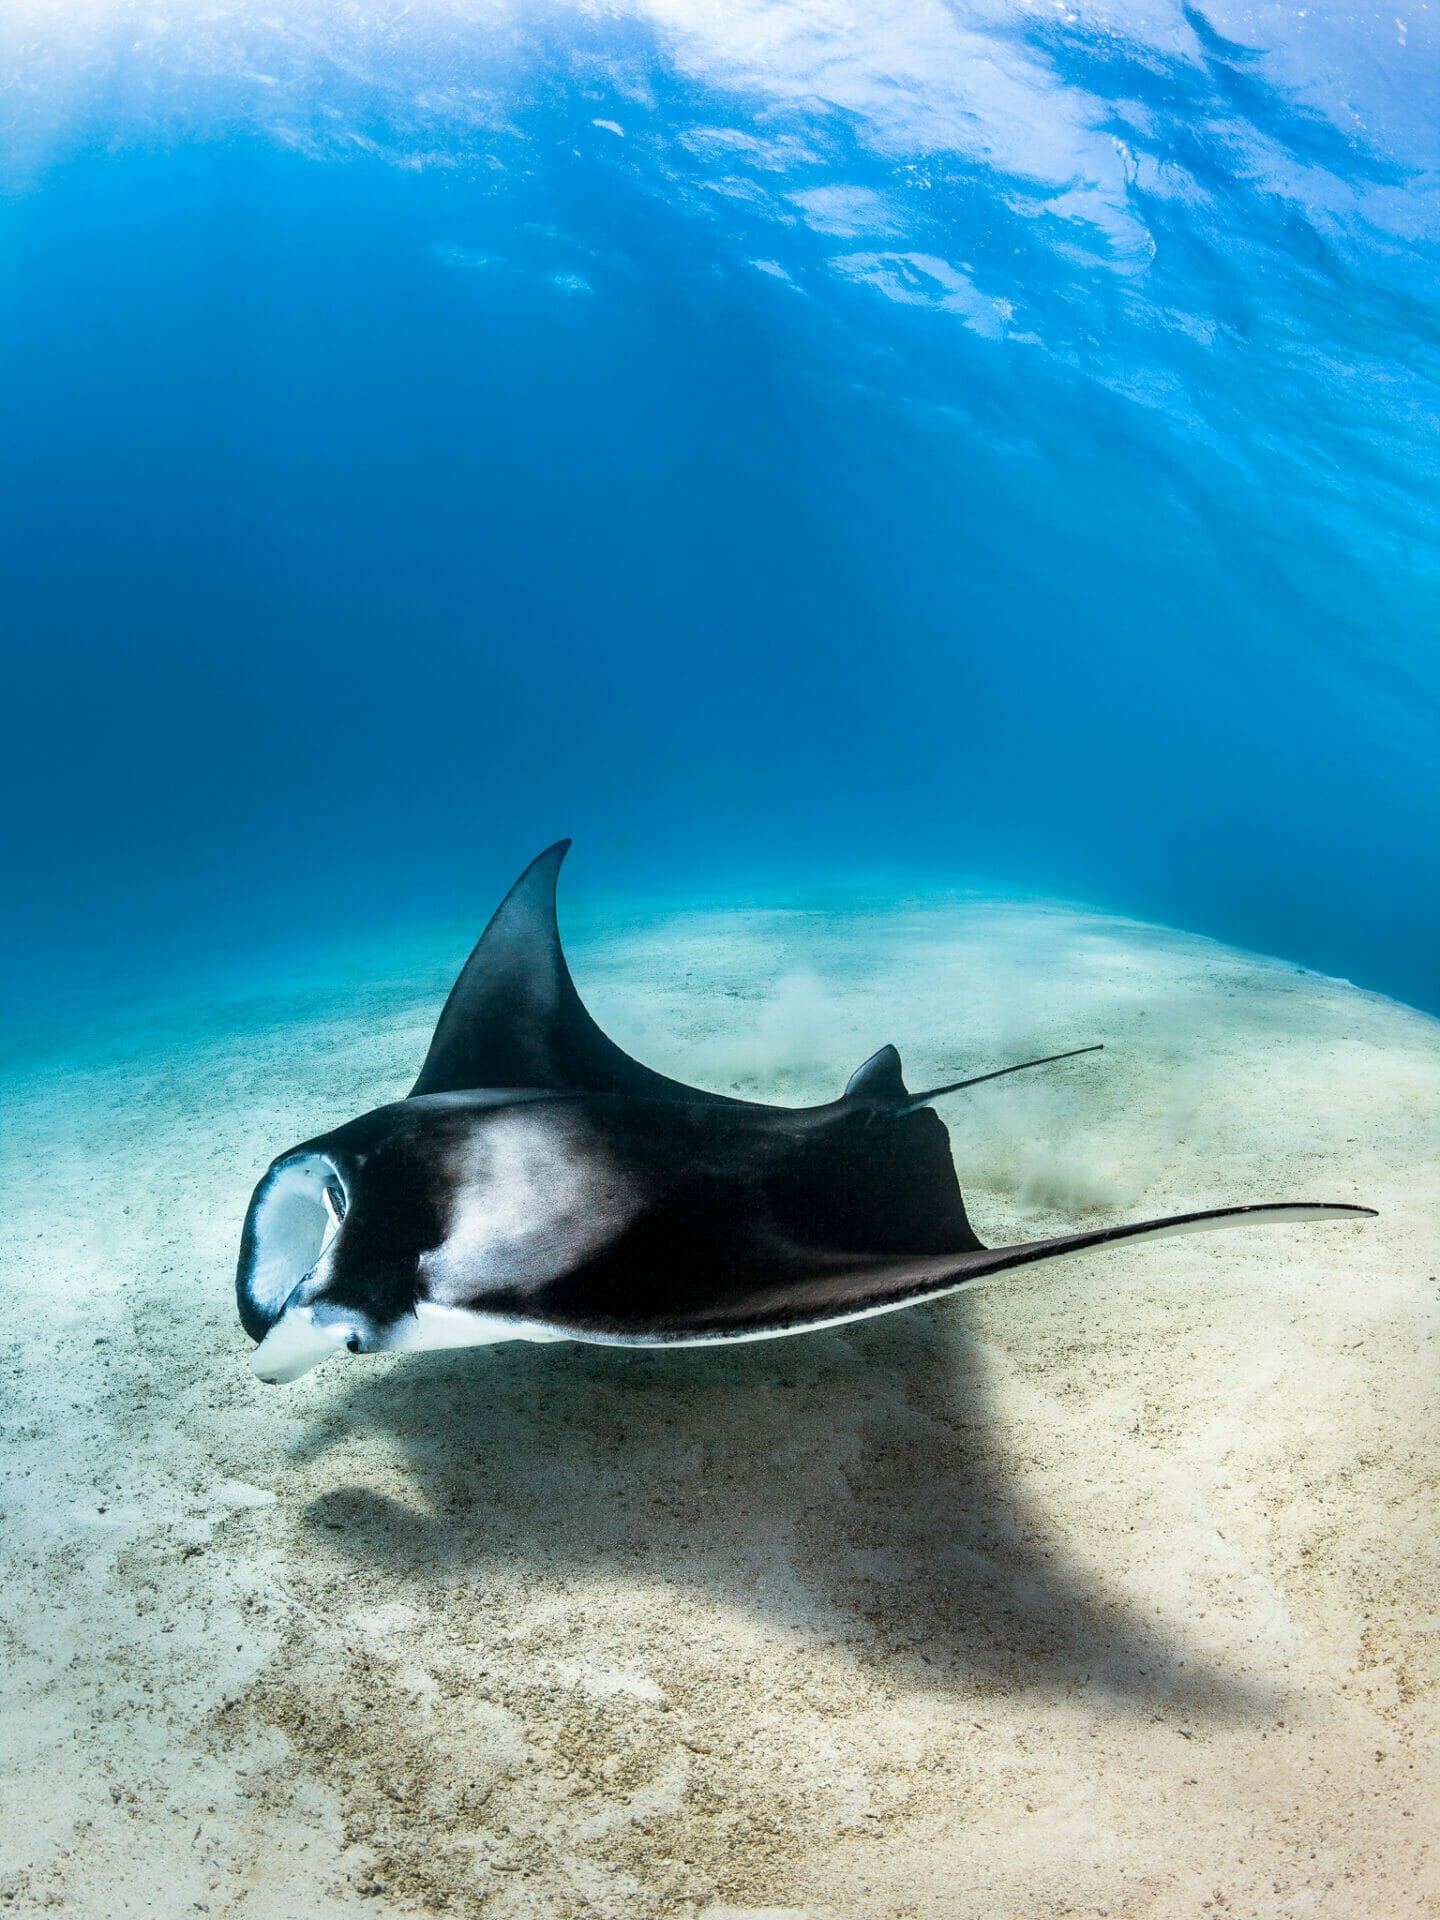 Manta ray skimming over a sandy bottom